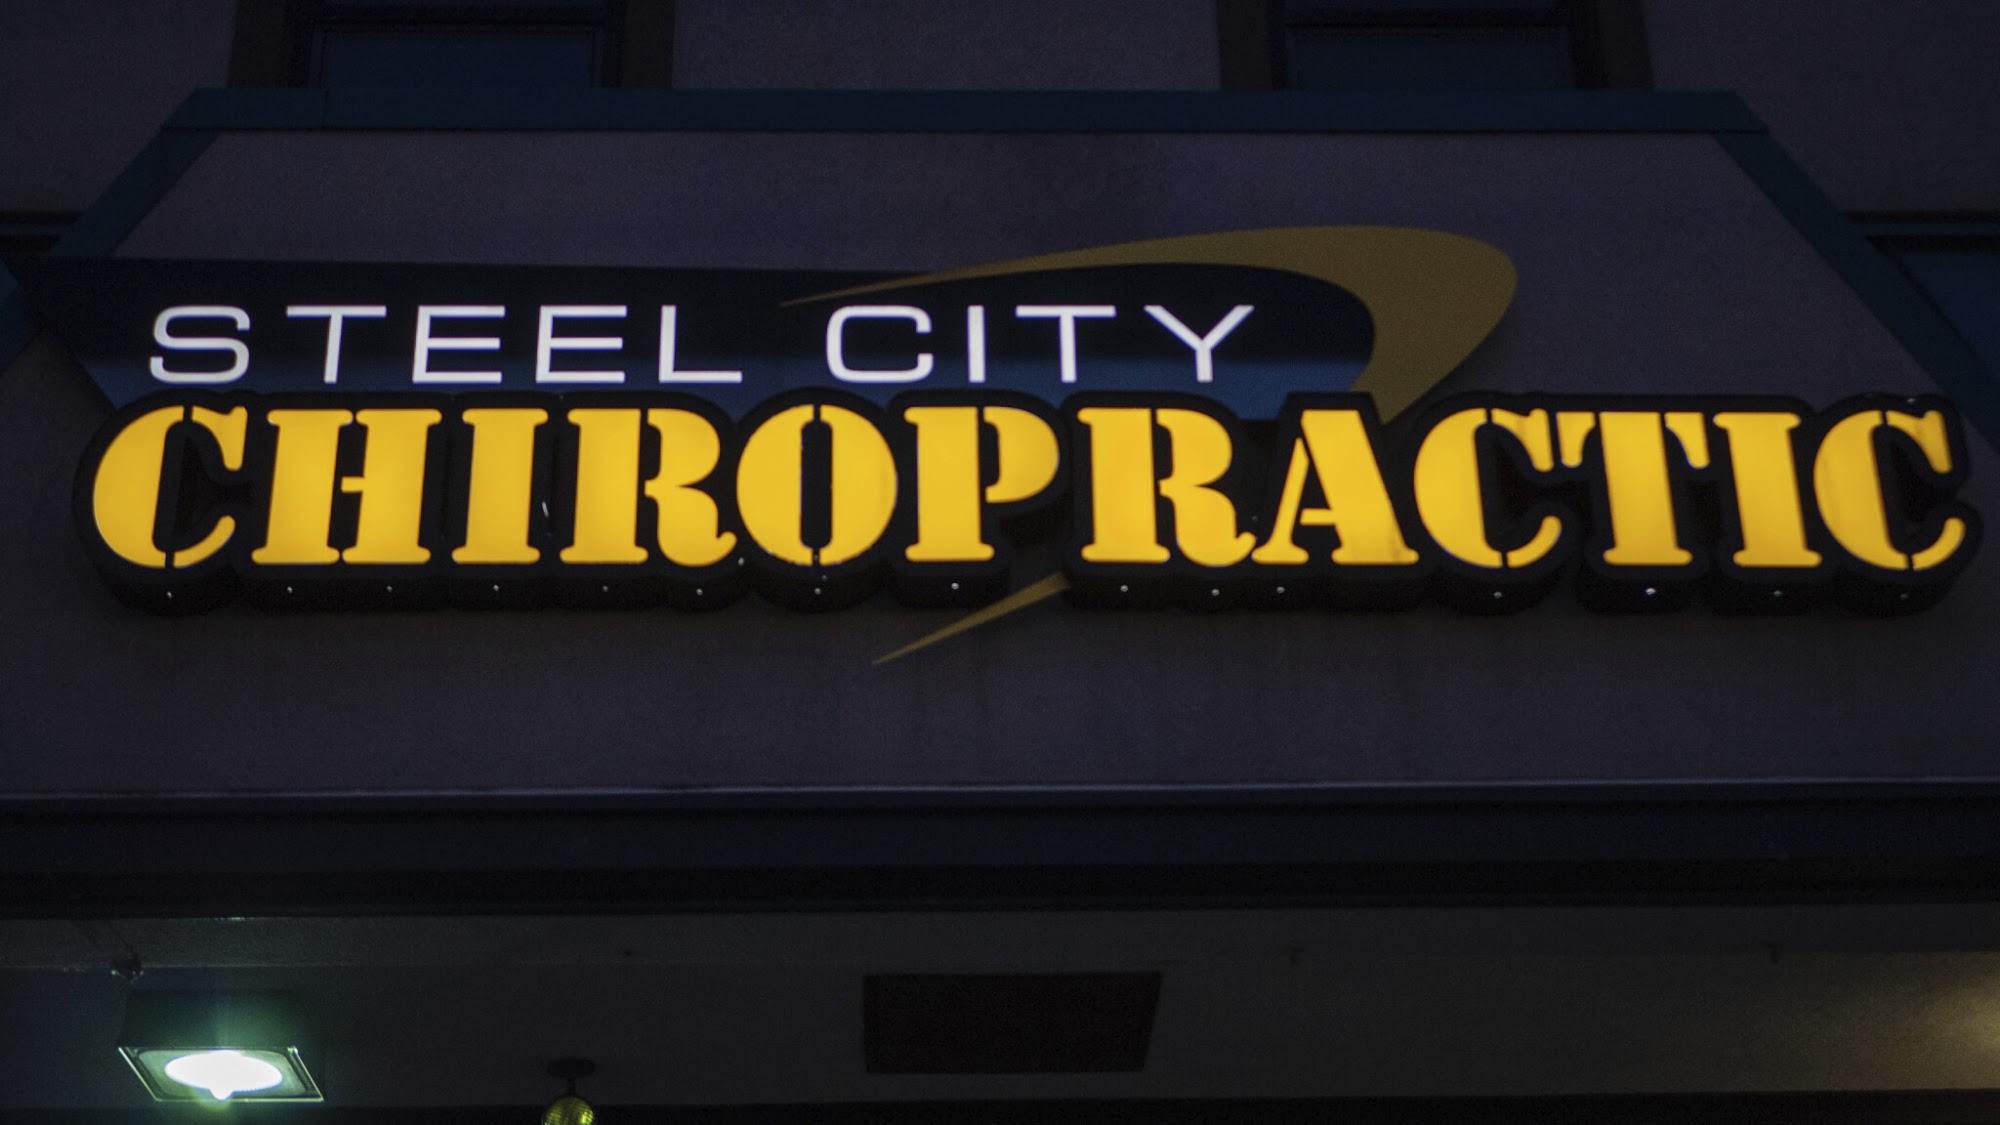 Steel City Chiropractic: John Montesano, DC 1021 Lebanon Rd, West Mifflin Pennsylvania 15122